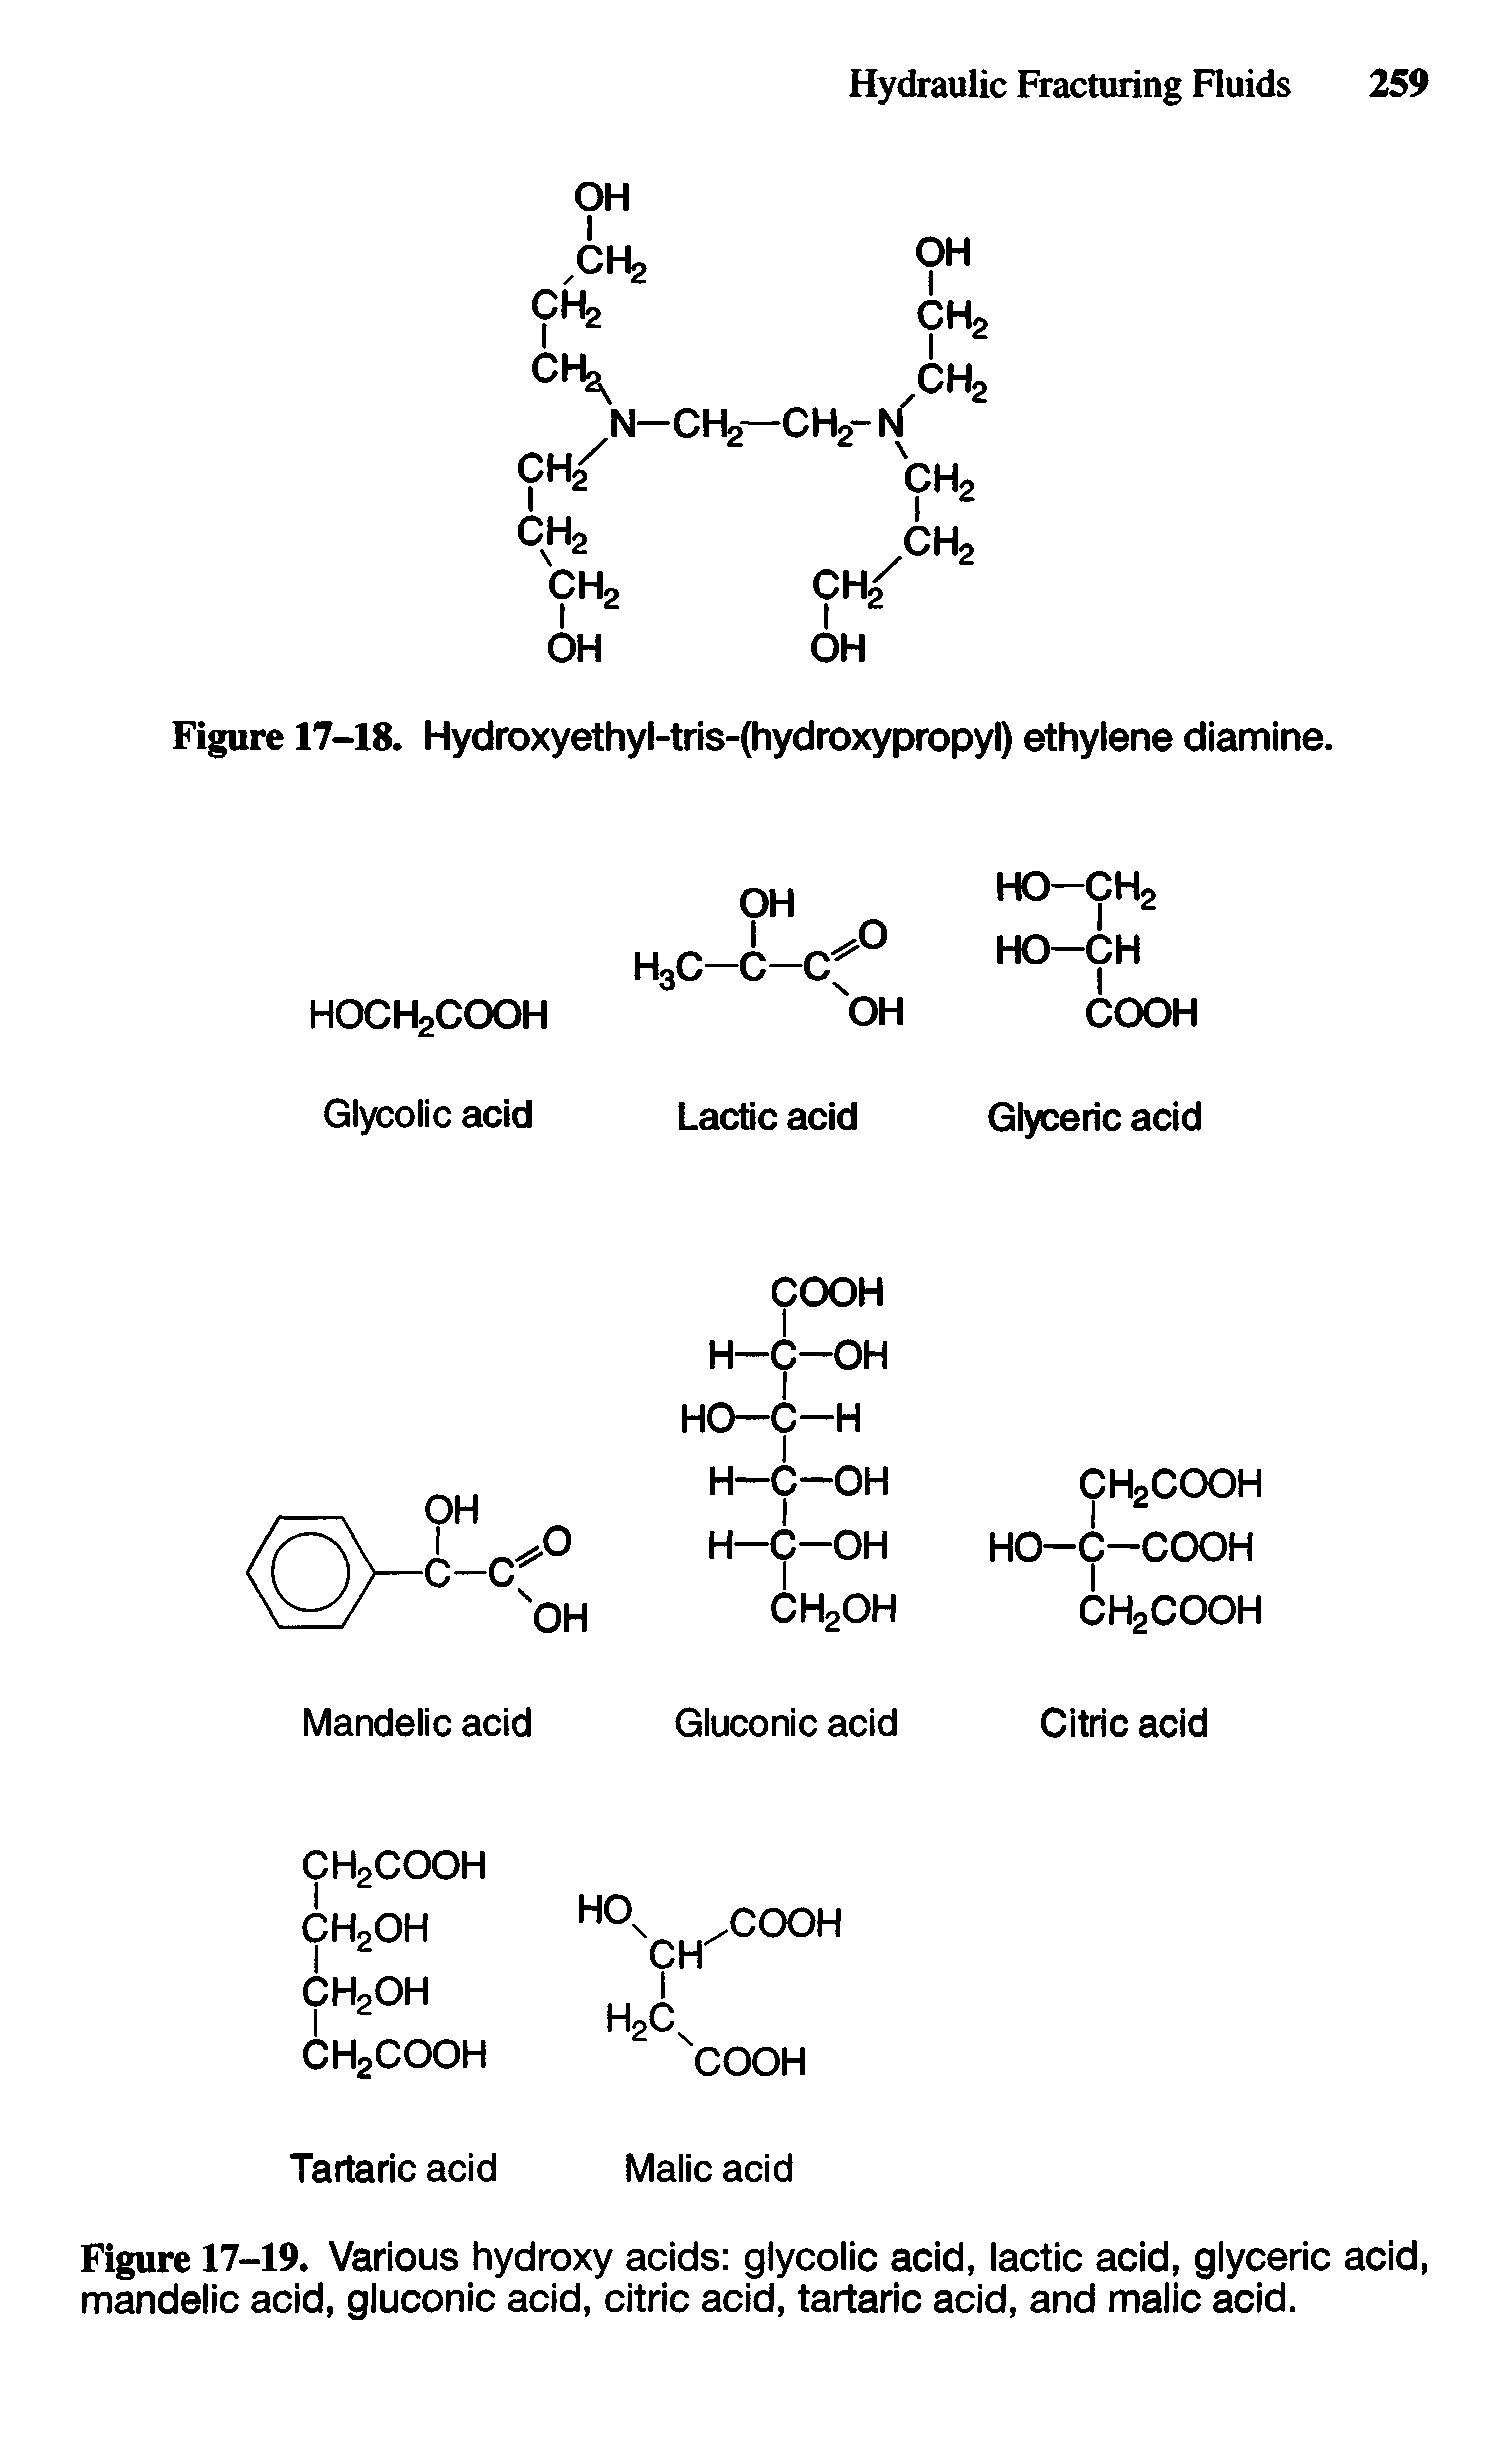 Figure 17-19. Various hydroxy acids glycolic acid, lactic acid, glyceric acid, mandelic acid, gluconic acid, citric acid, tartaric acid, and malic acid.